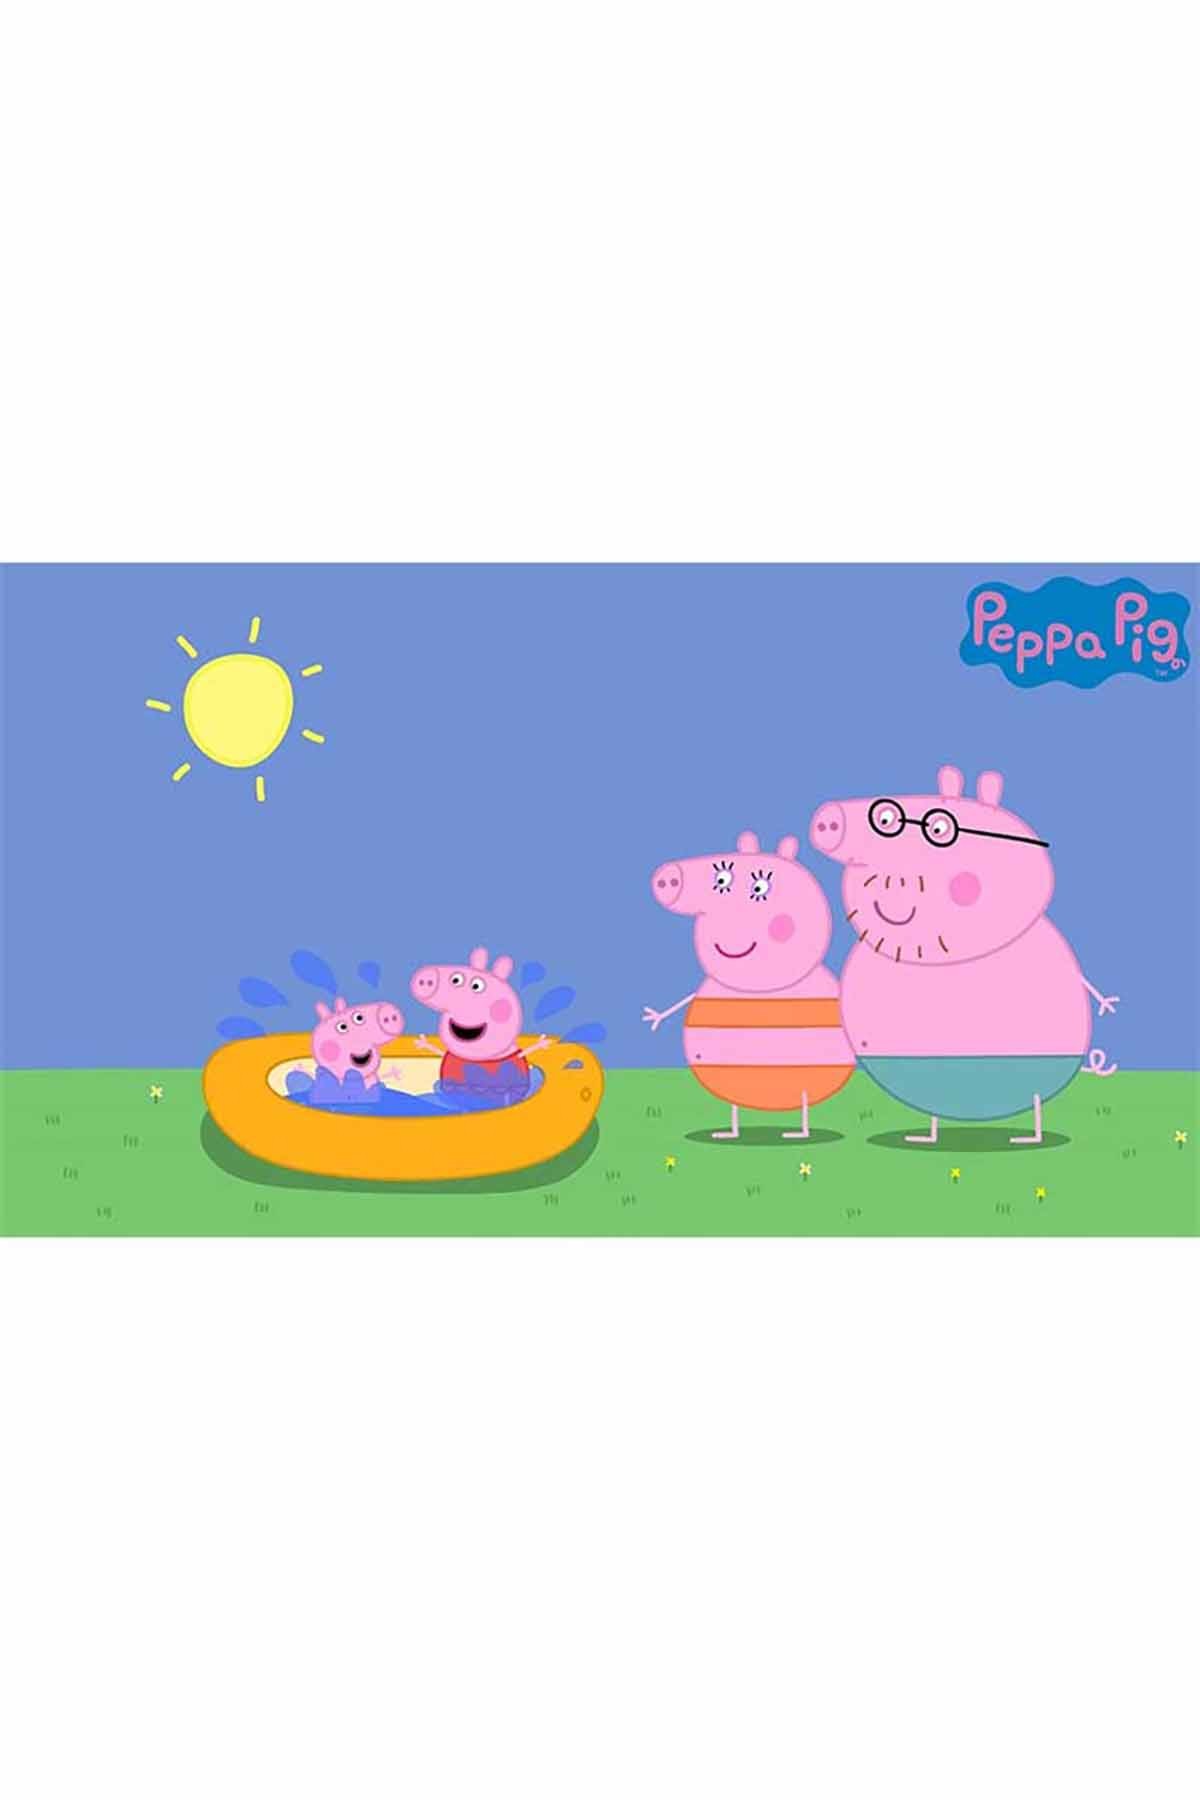 Peppa Pig: Summer Fun! Sticker Activity